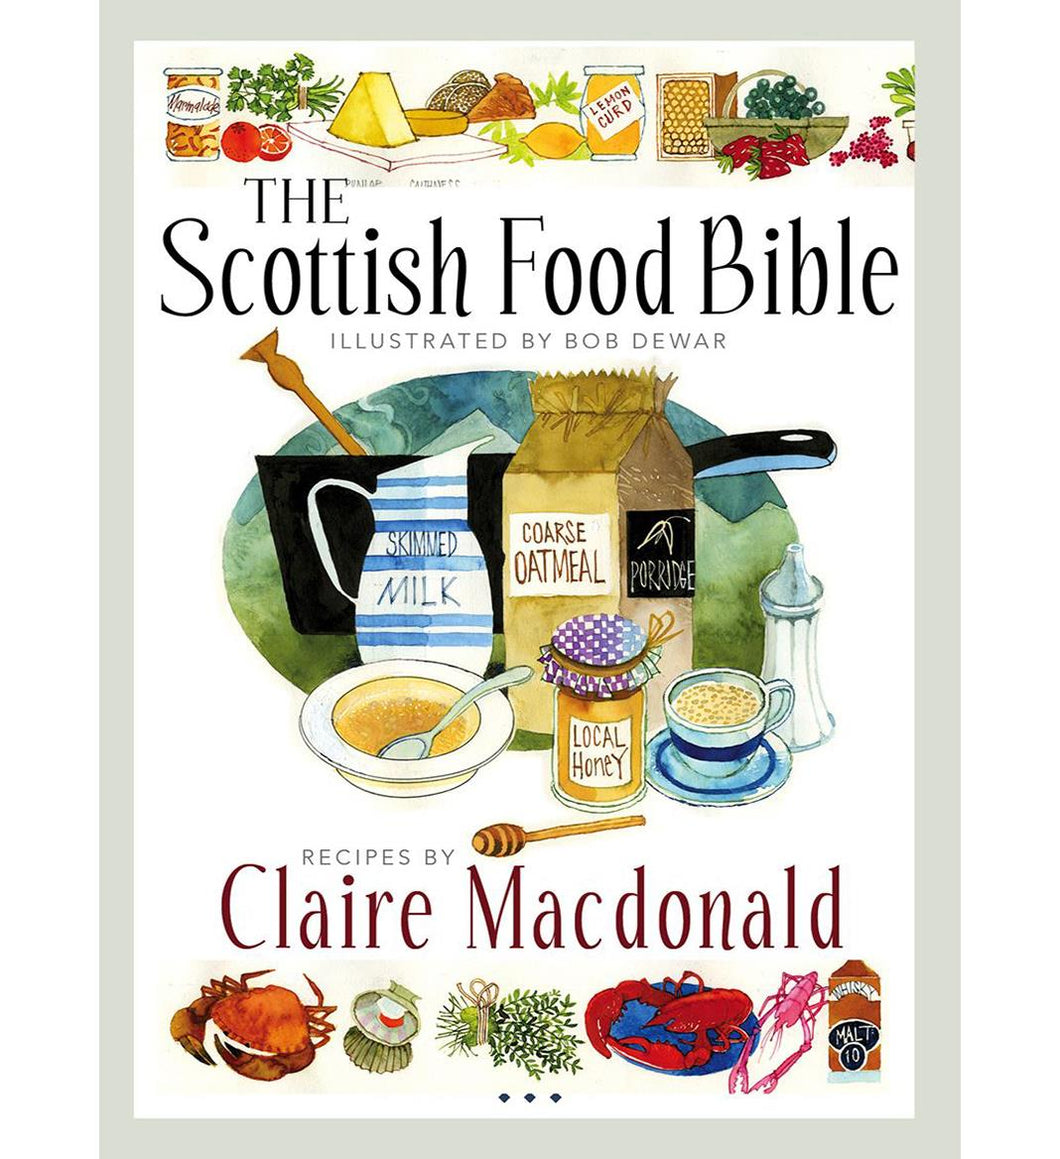 The Scottish Food Bible Cookbook